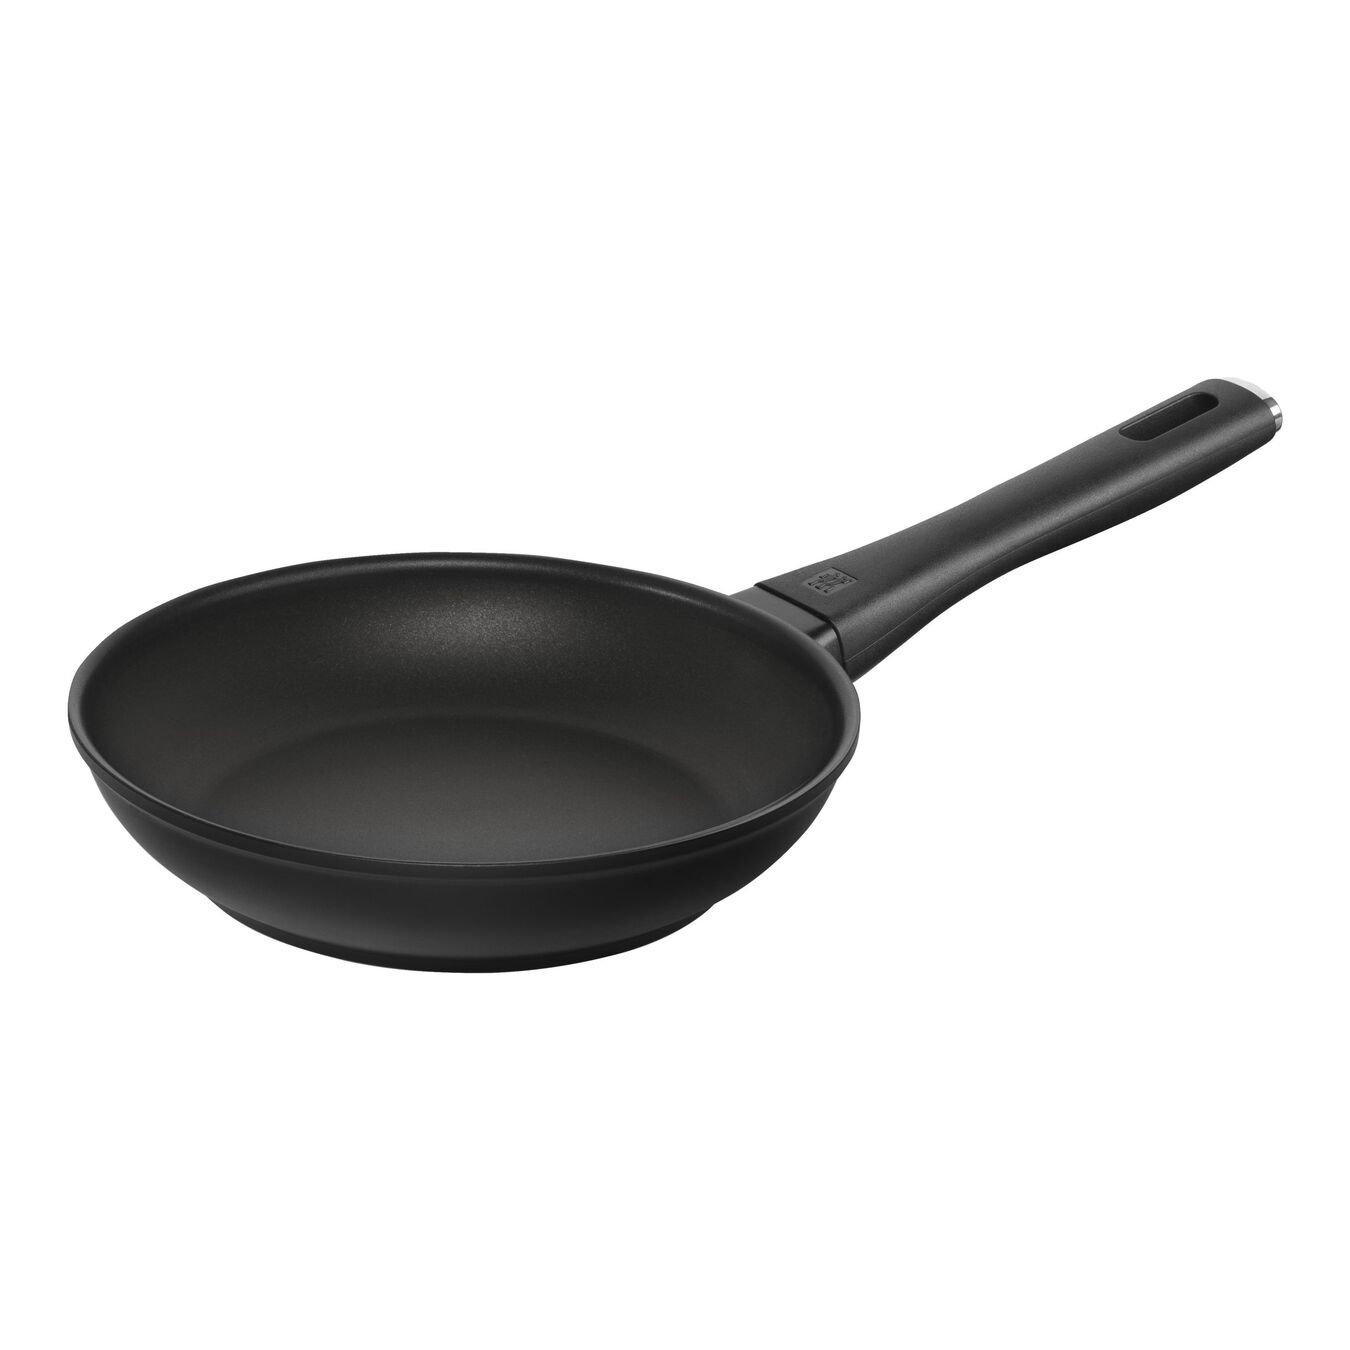 8-inch, Non-stick, Aluminum Fry Pan,,large 4